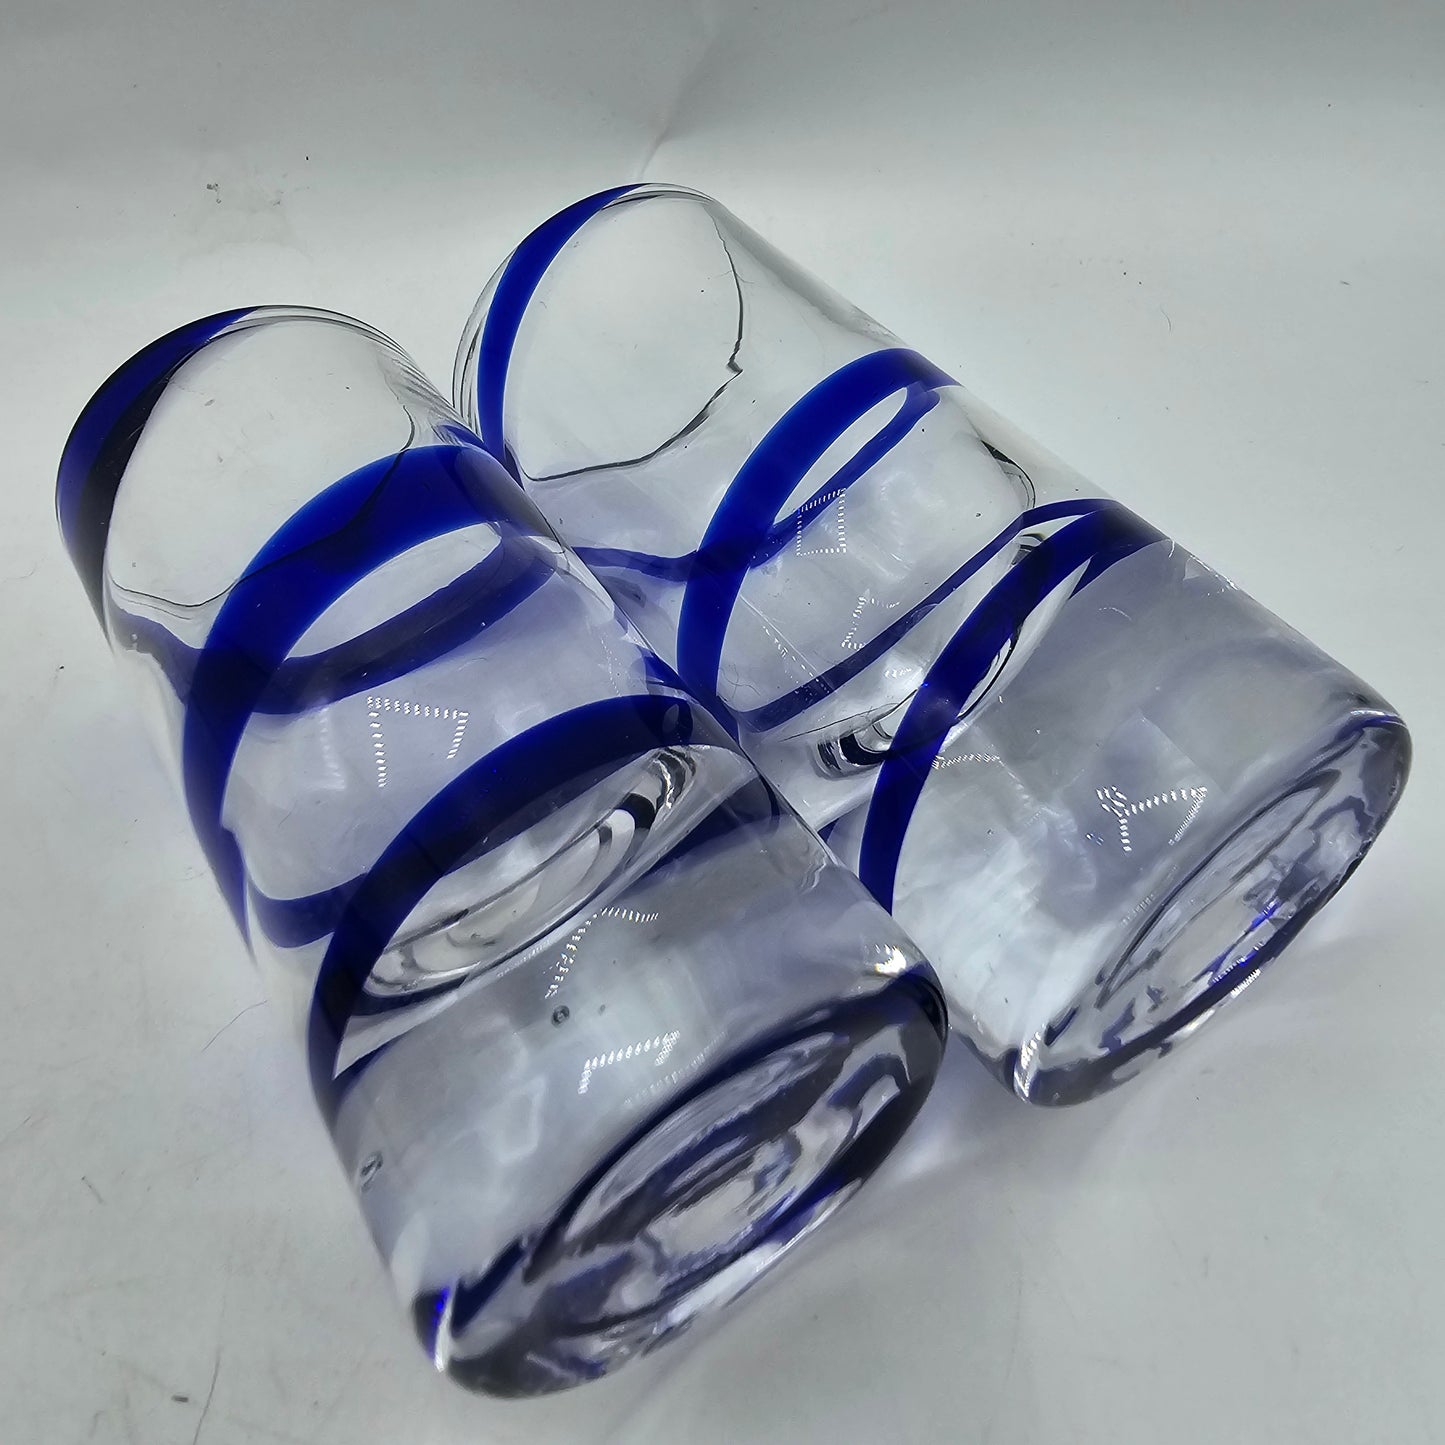 Pair of Cobalt Blue Swirl Glass Shot Glasses - Pier 1 Imports